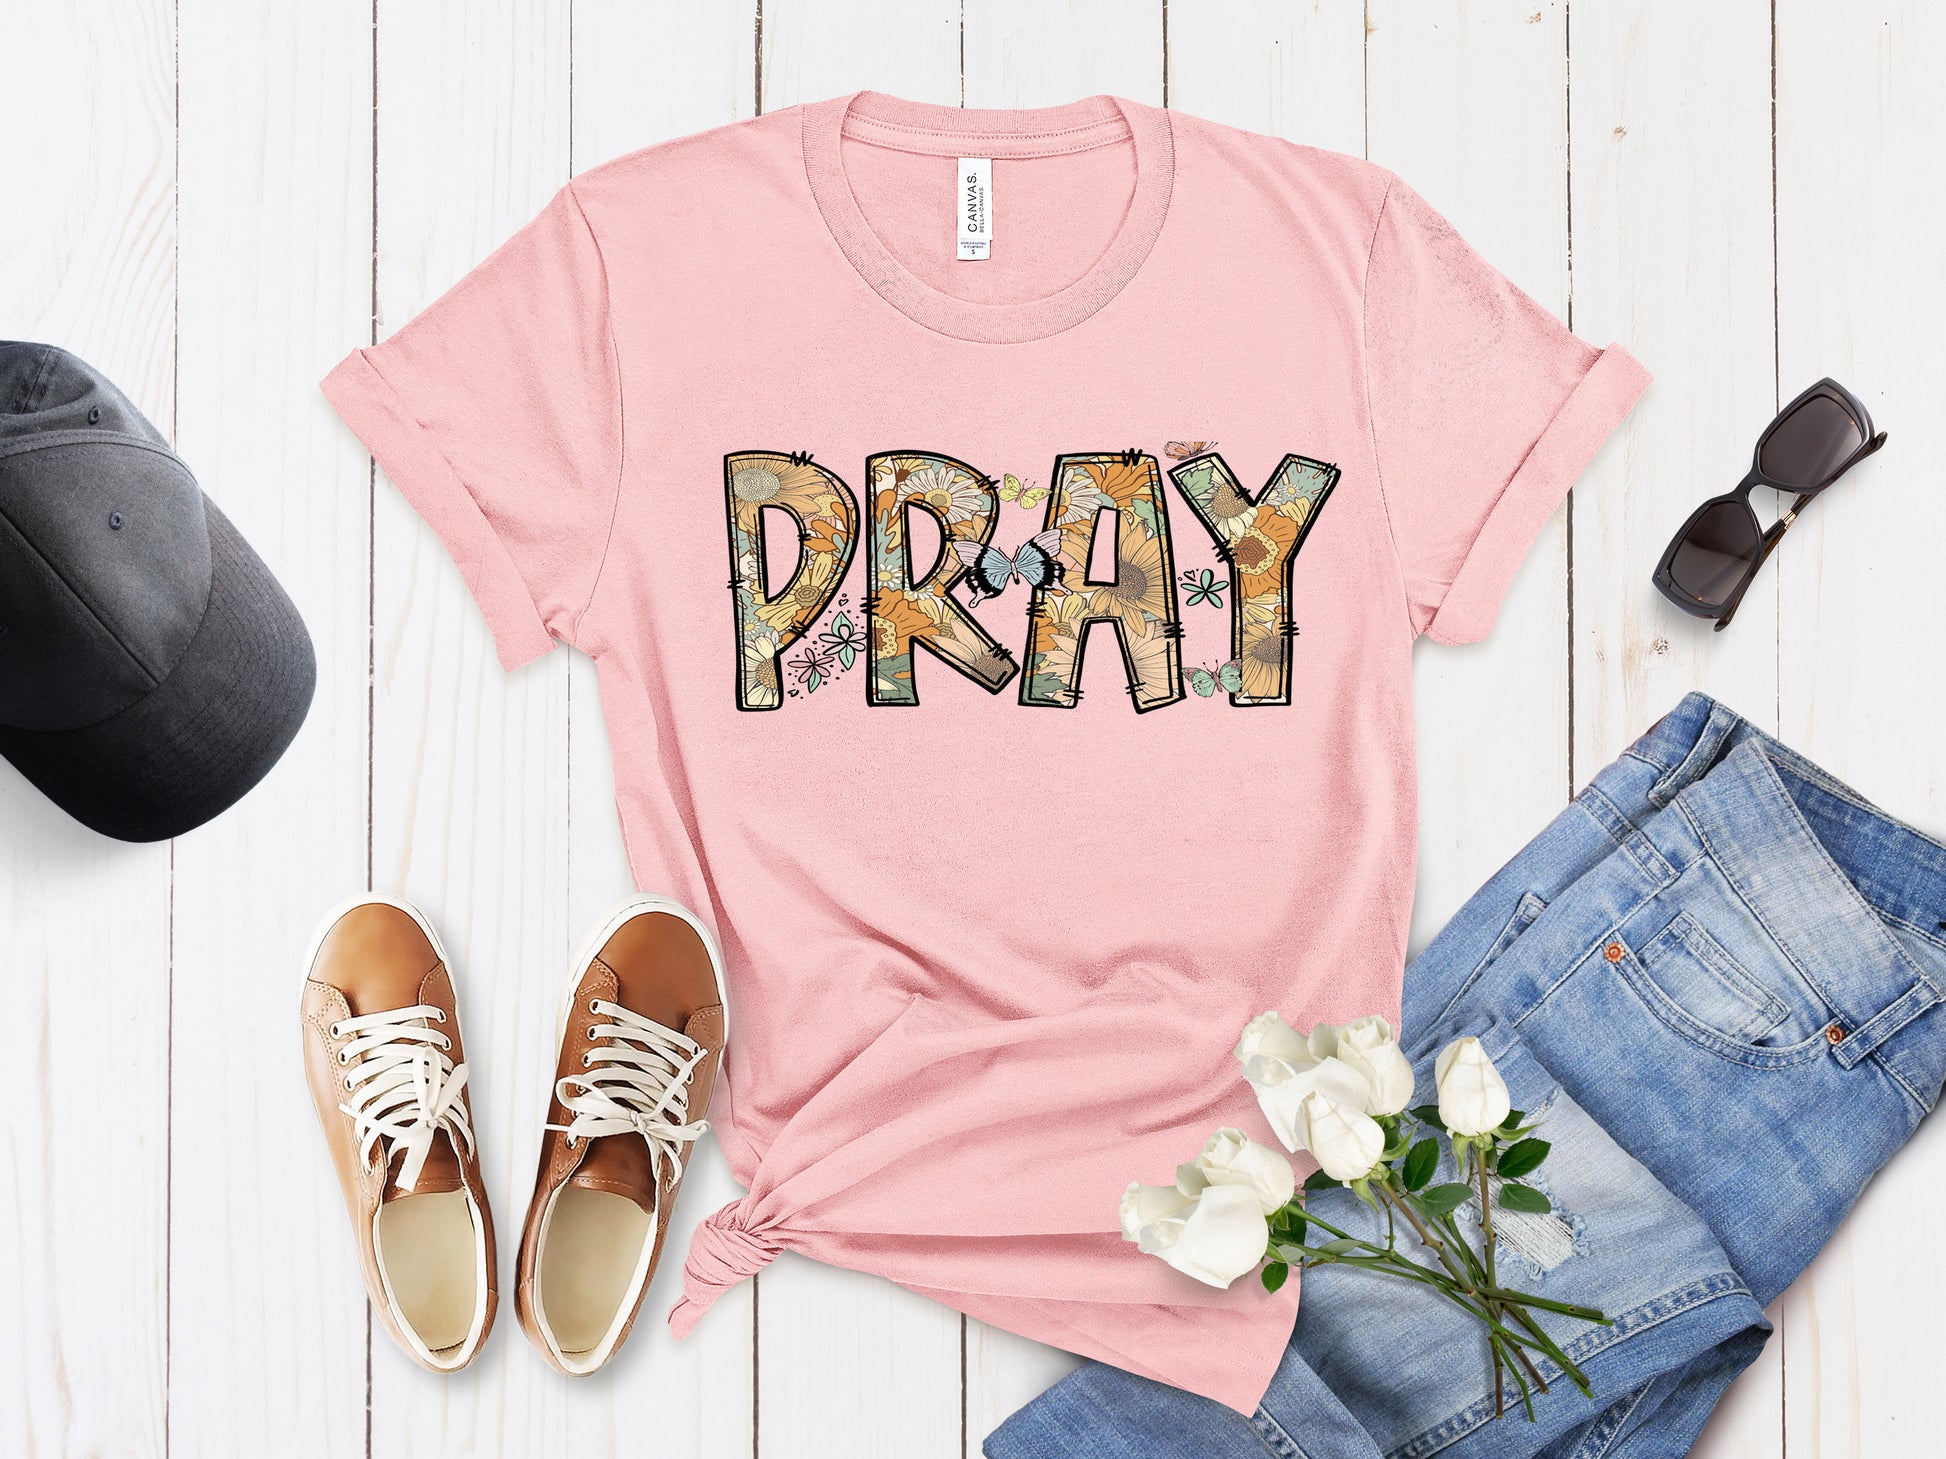 Christian tee shirts Pray pink color shirt 